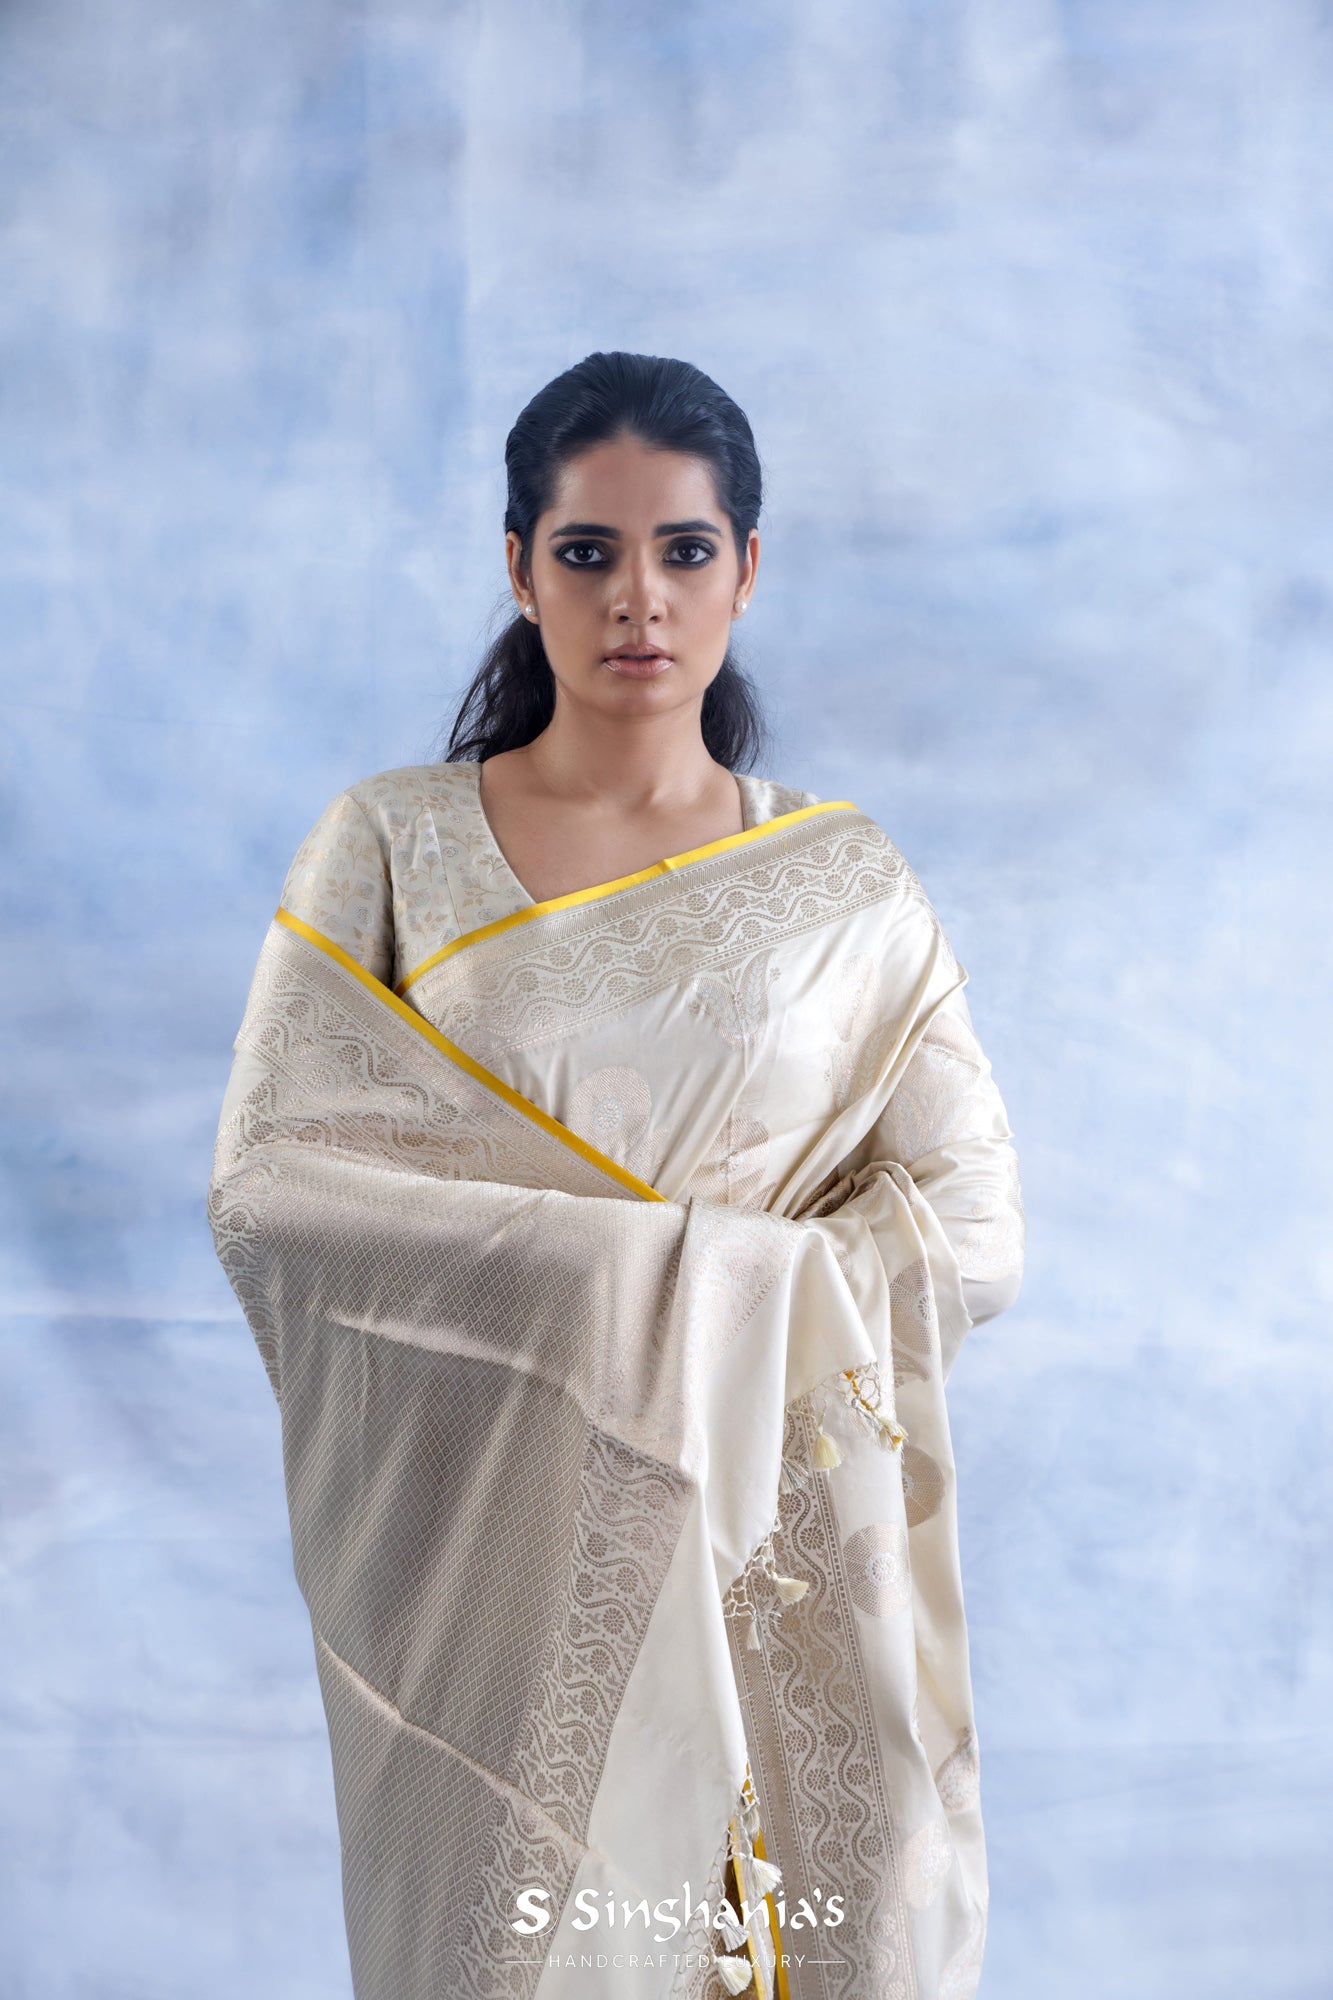 Party Wear Saree - Buy Party Wear Saris For Women Online – Koskii